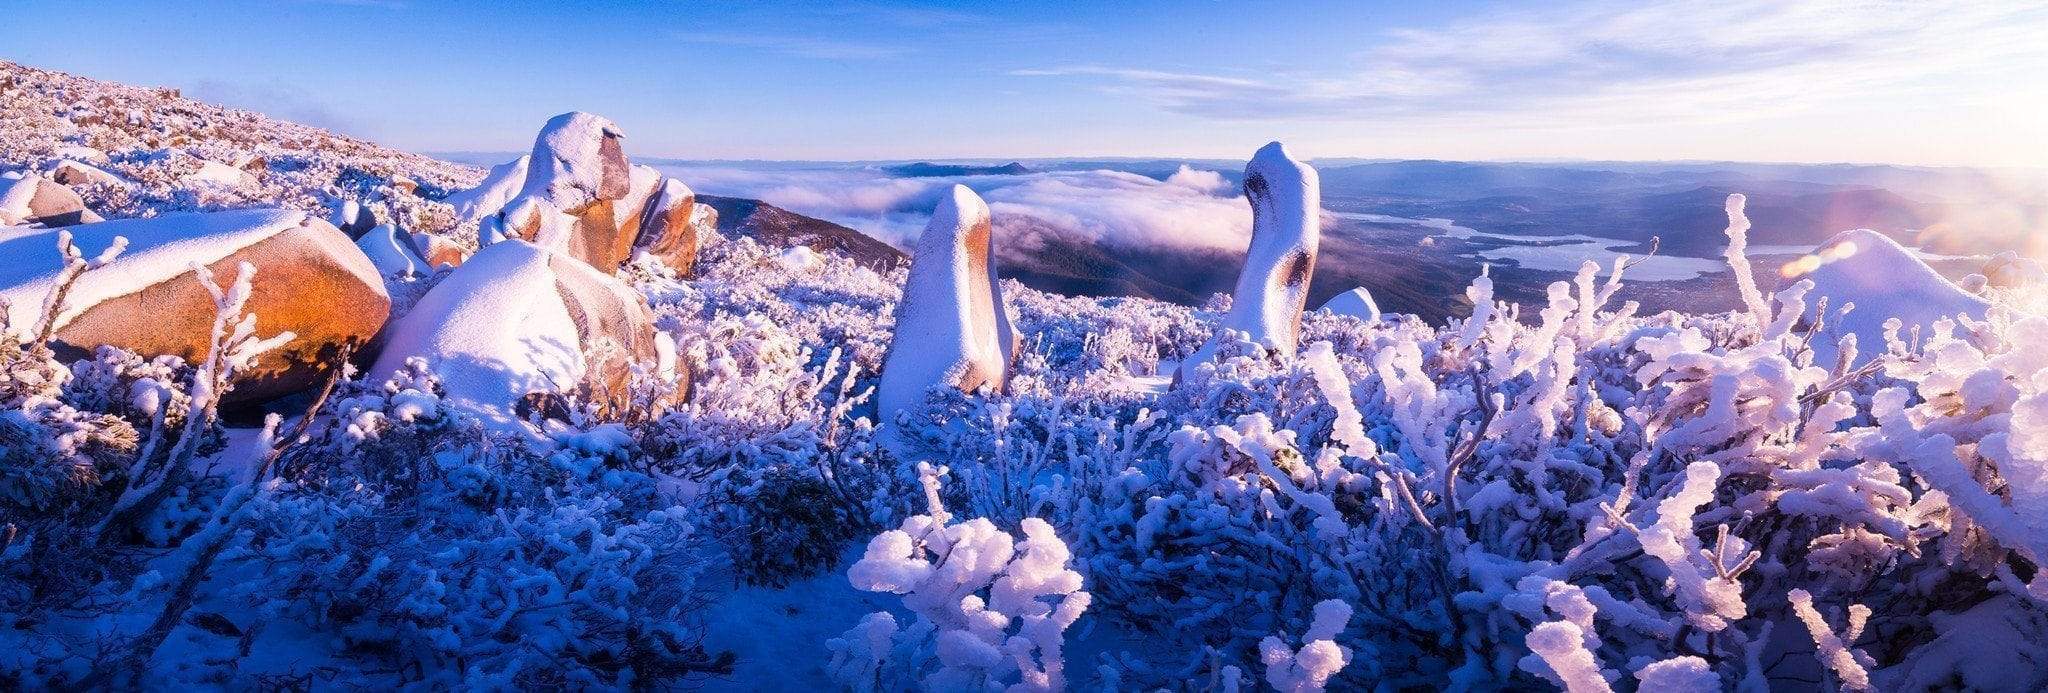 The unique shape of crystalline ice pieces, Mount Wellington